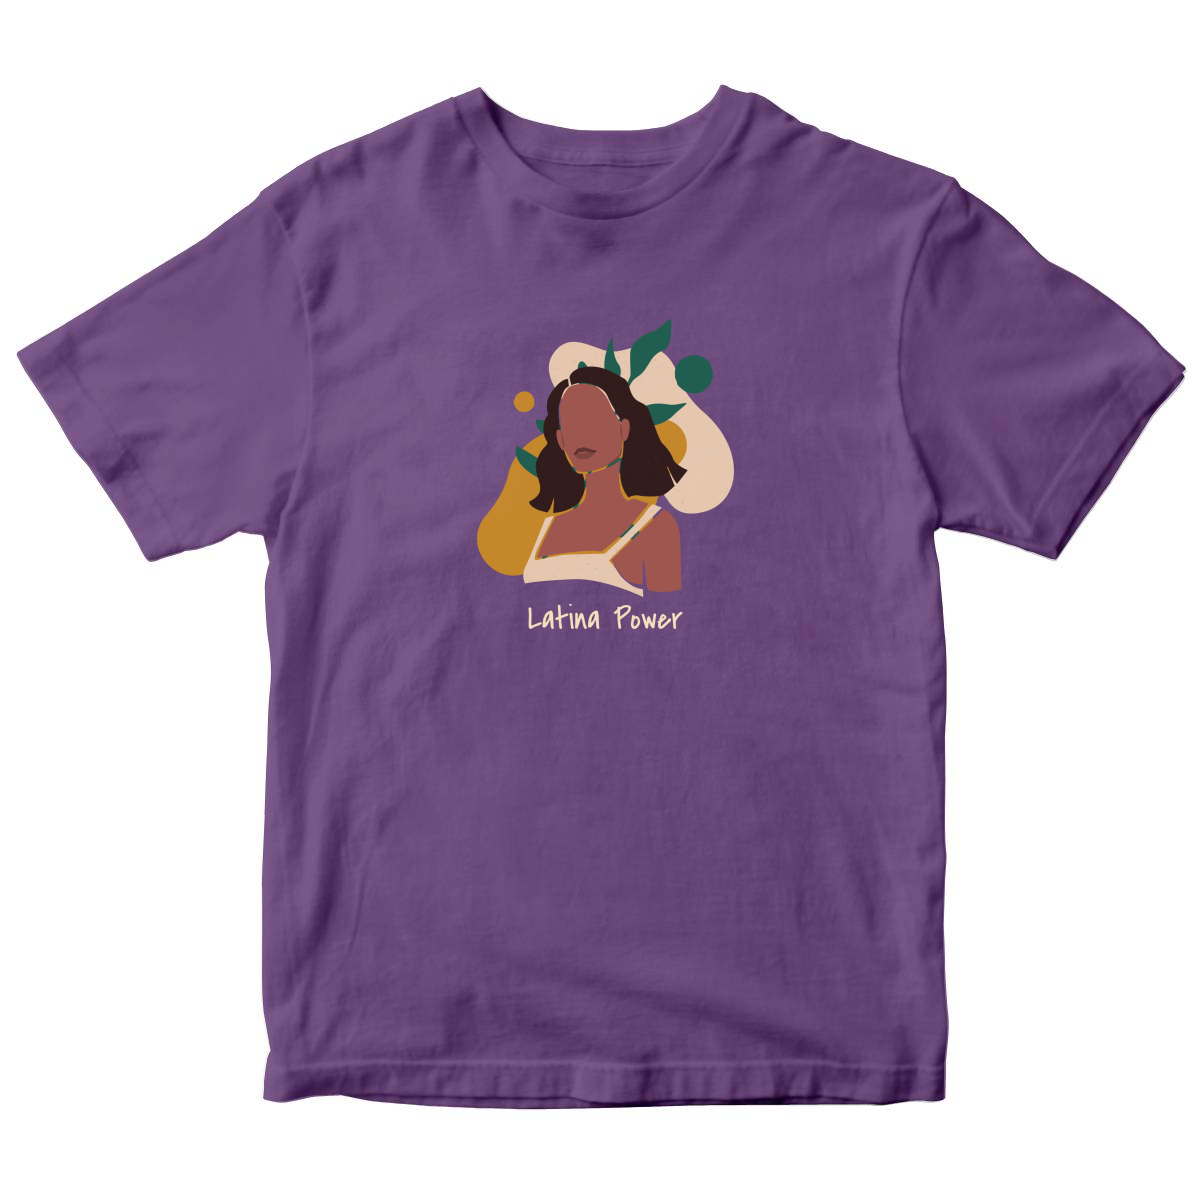 Latina Power Kids T-shirt | Purple